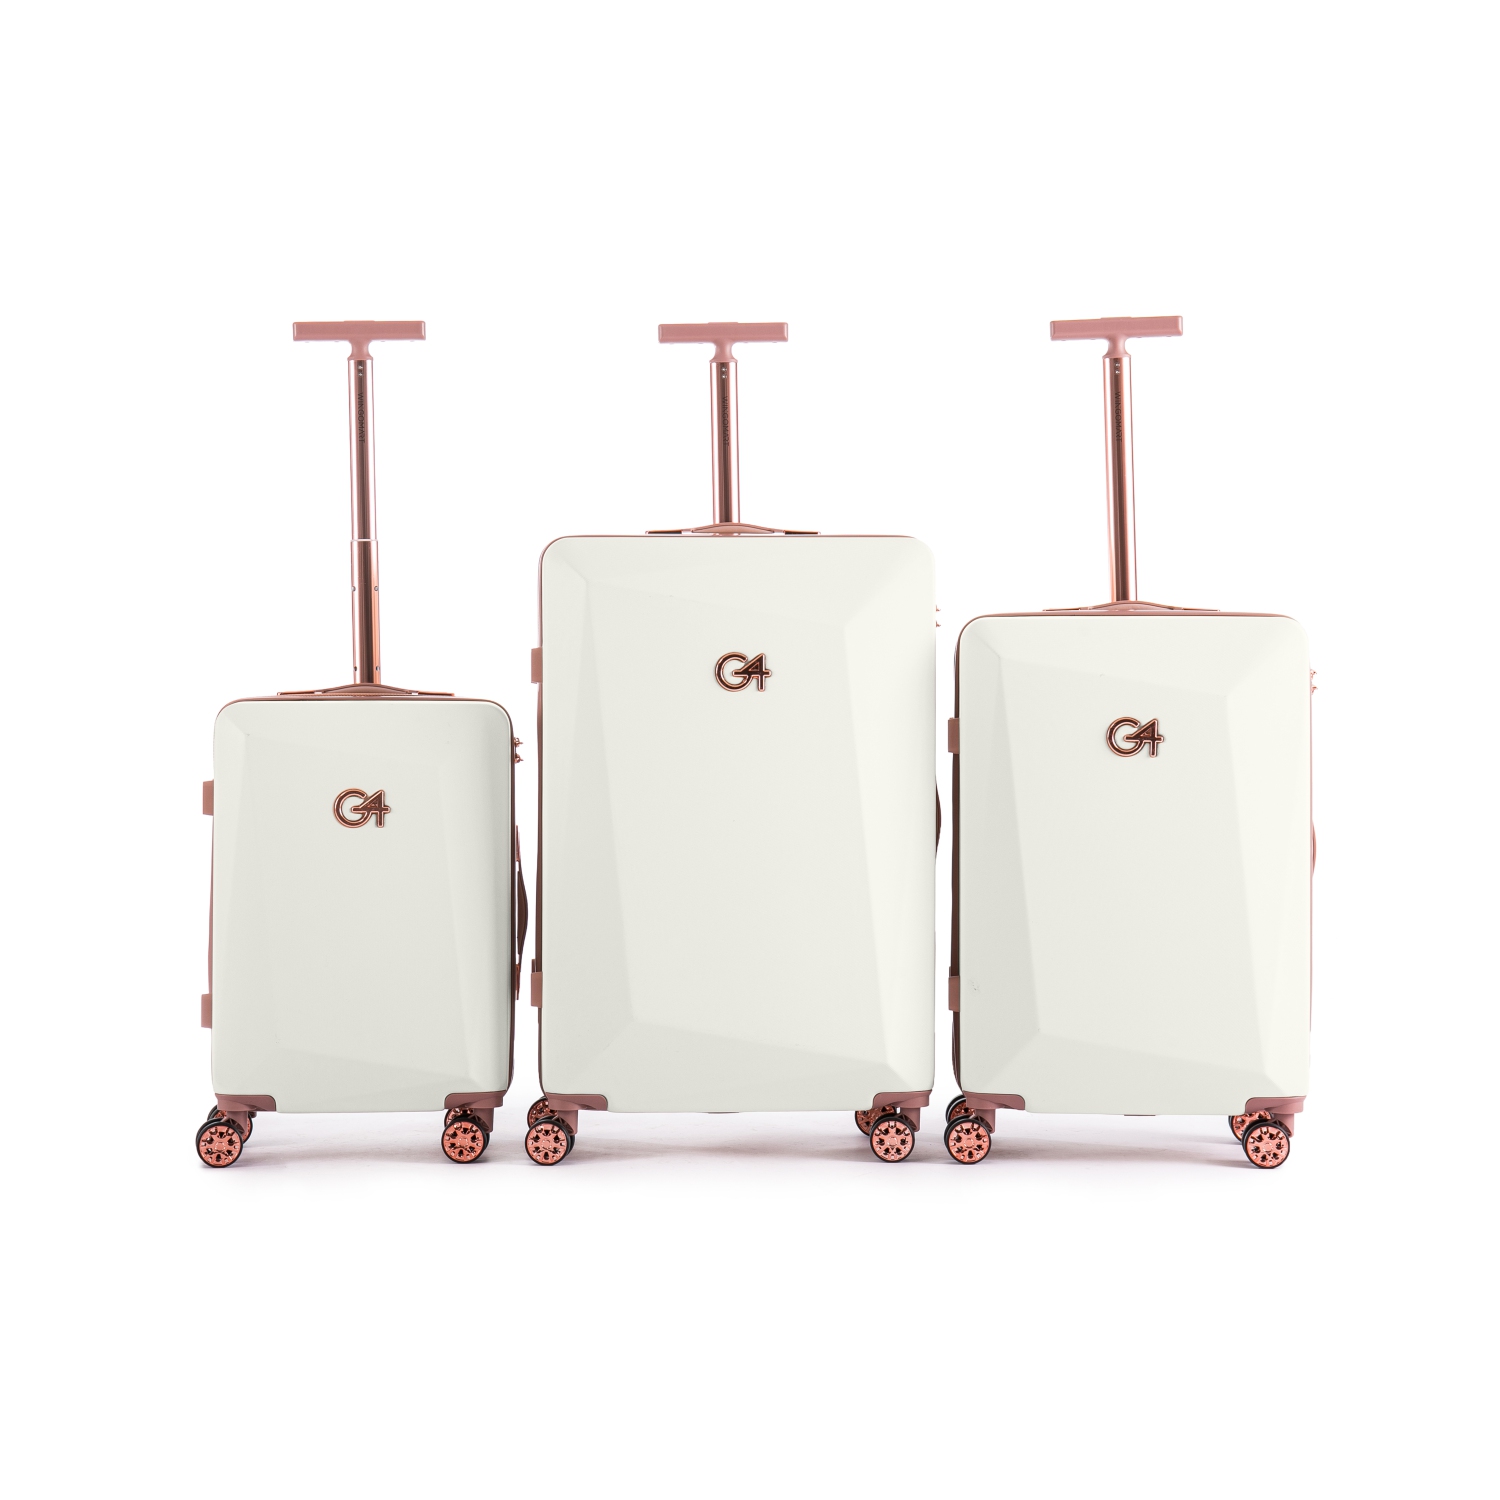 WINGOMART 3-Piece Luggage Set Lightweight Durable PC+ABS Hardshell, Double Spinner Wheels, TSA Lock - 20in/24IN/28in- Sand